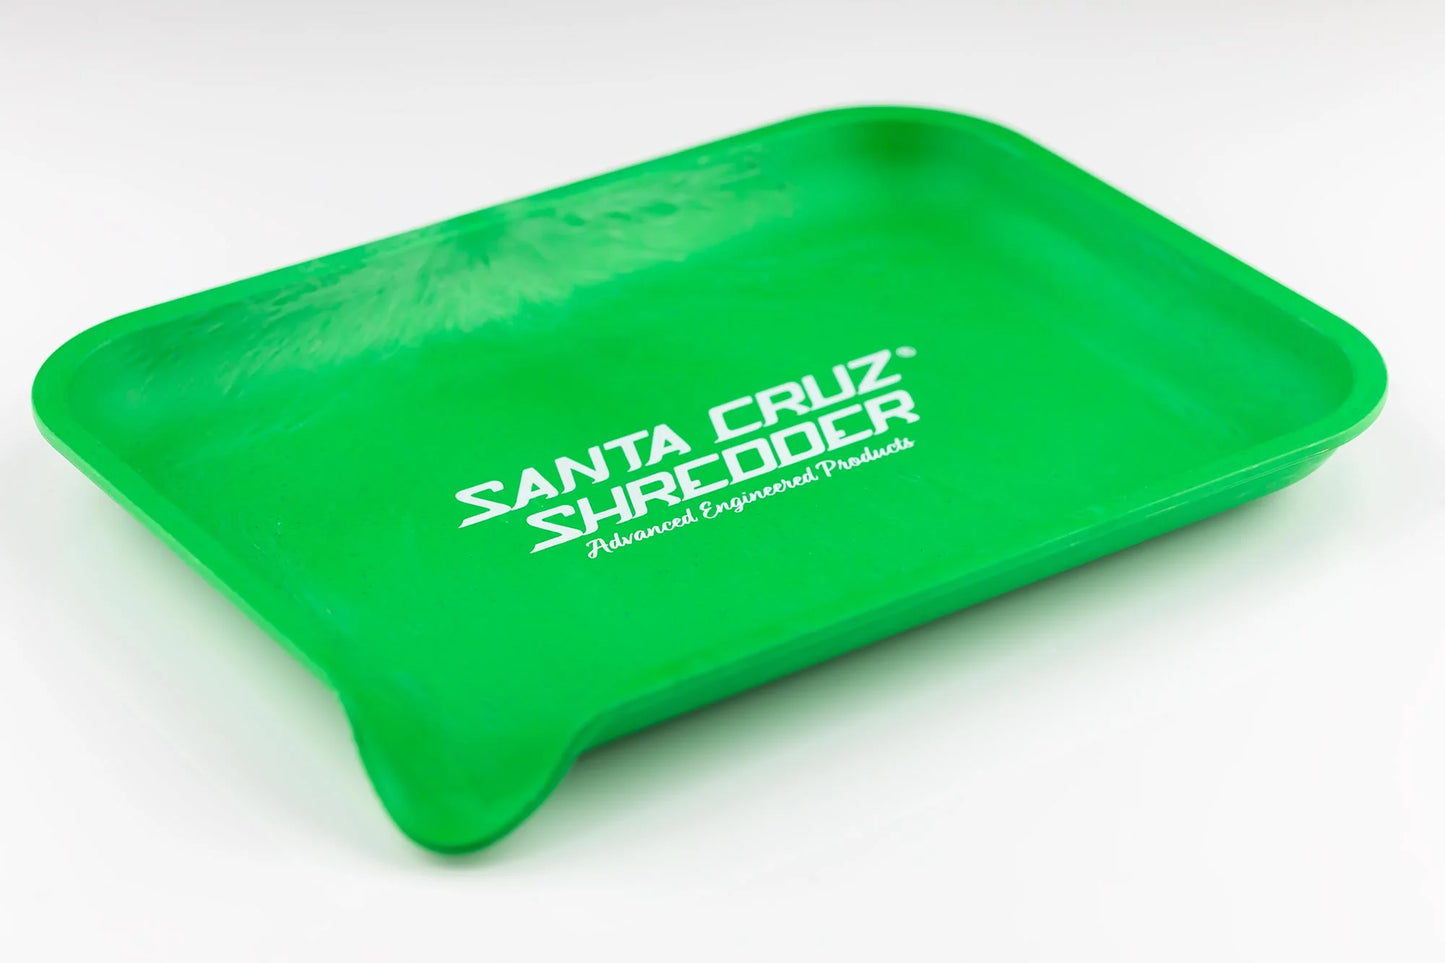 Santa Cruz Shredder Hemp Rolling Tray Small